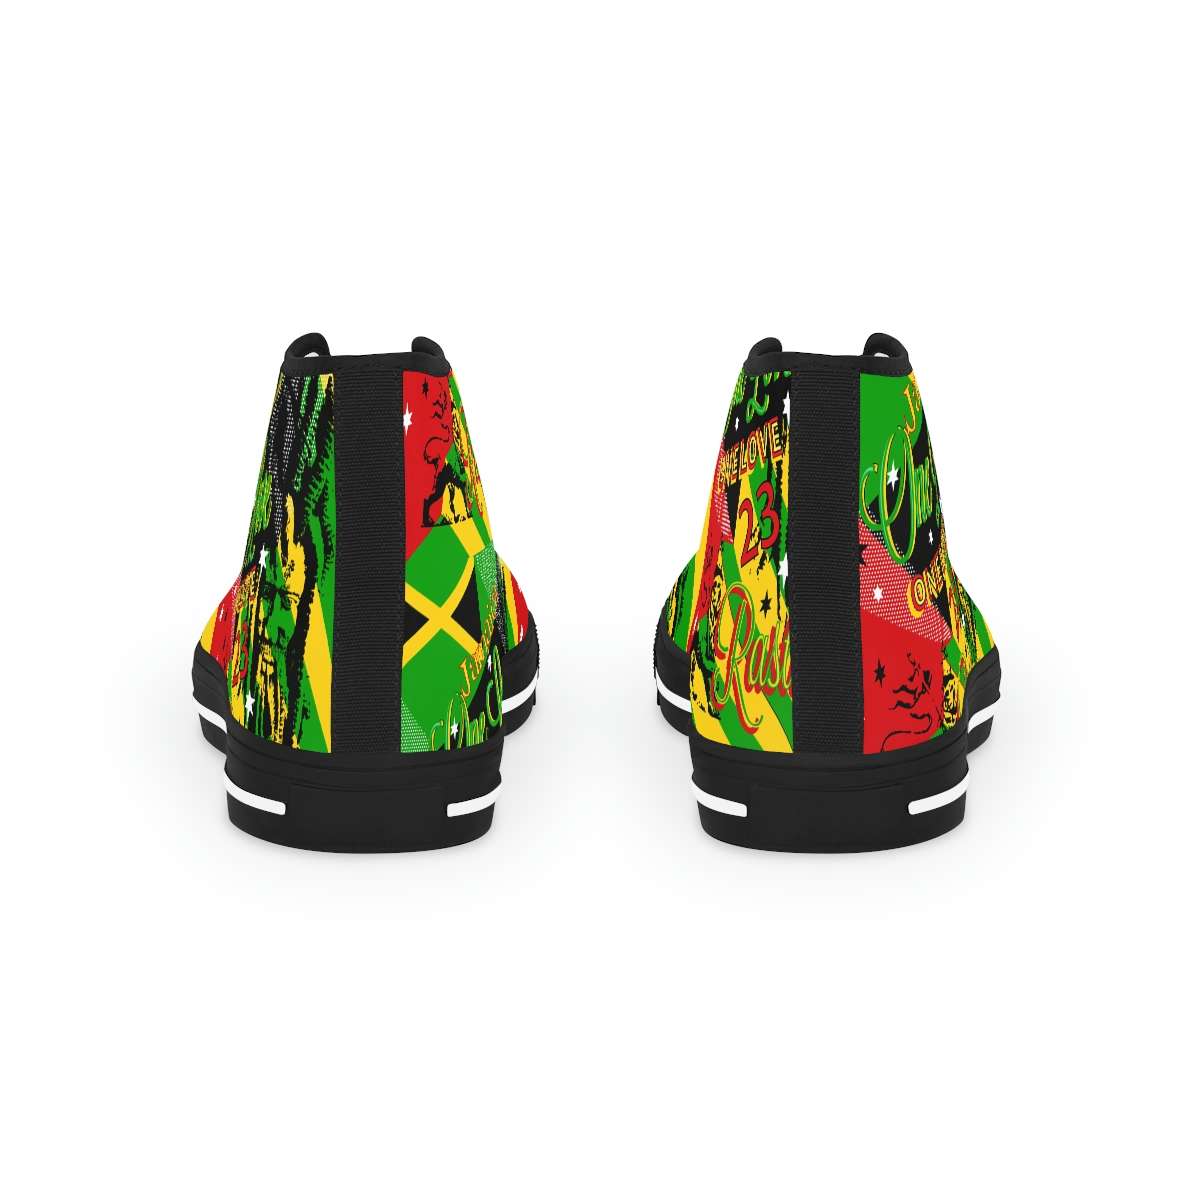 Rasta Reggae Party Men's High Top Sneakers in the Reggae colors back view black sole